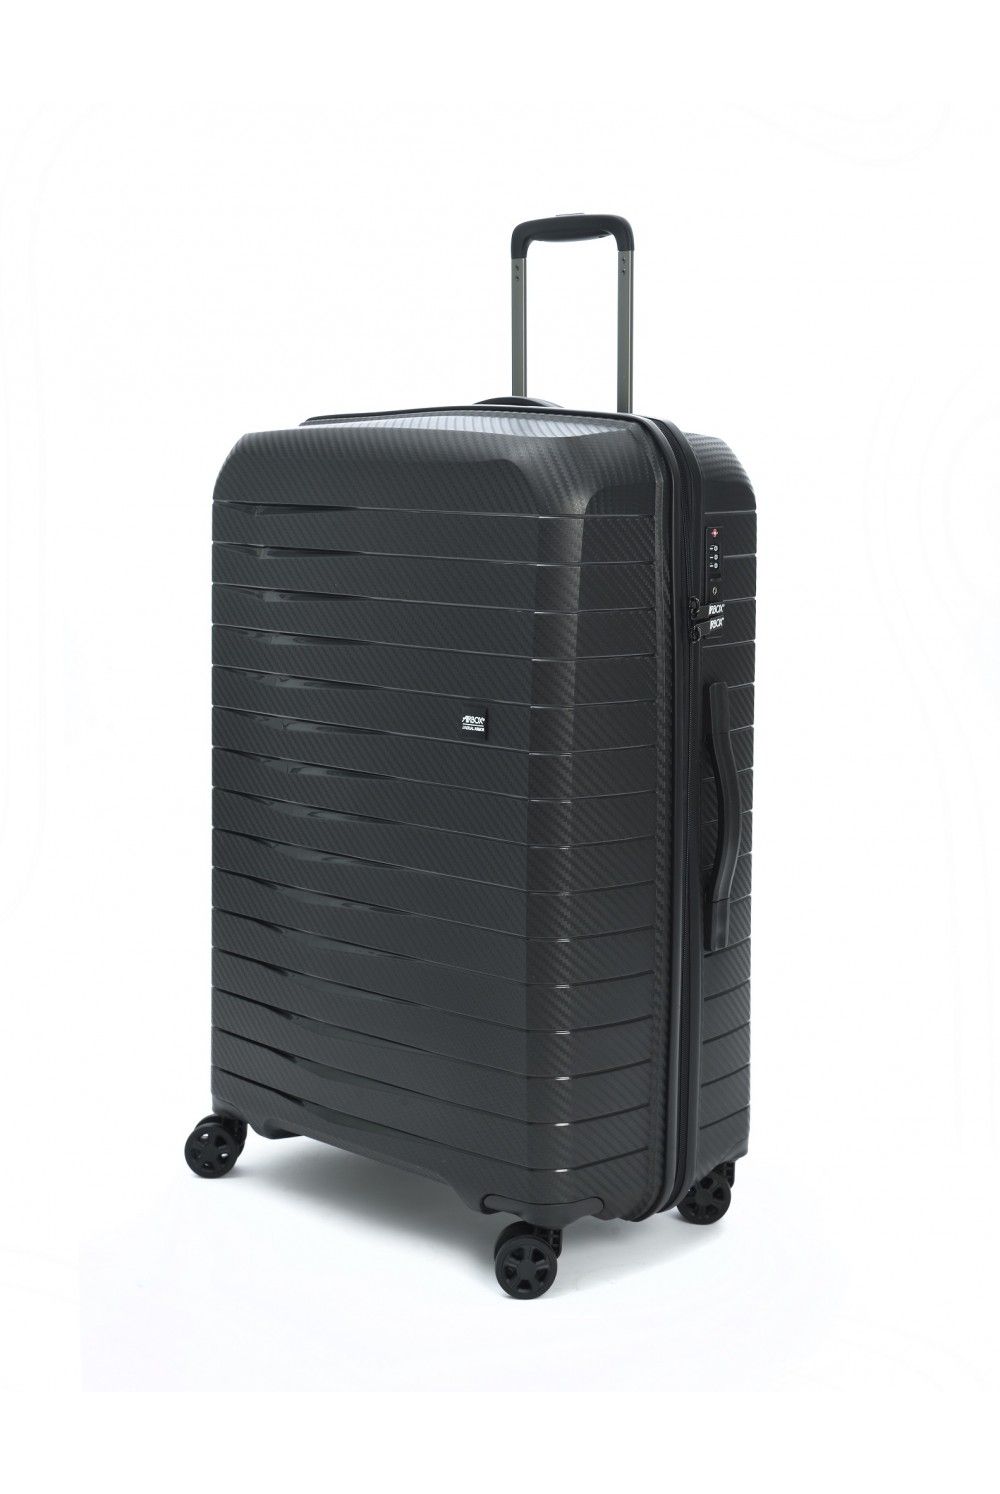 Koffer L AIRBOX AZ18 74cm 4 Rad schwarz